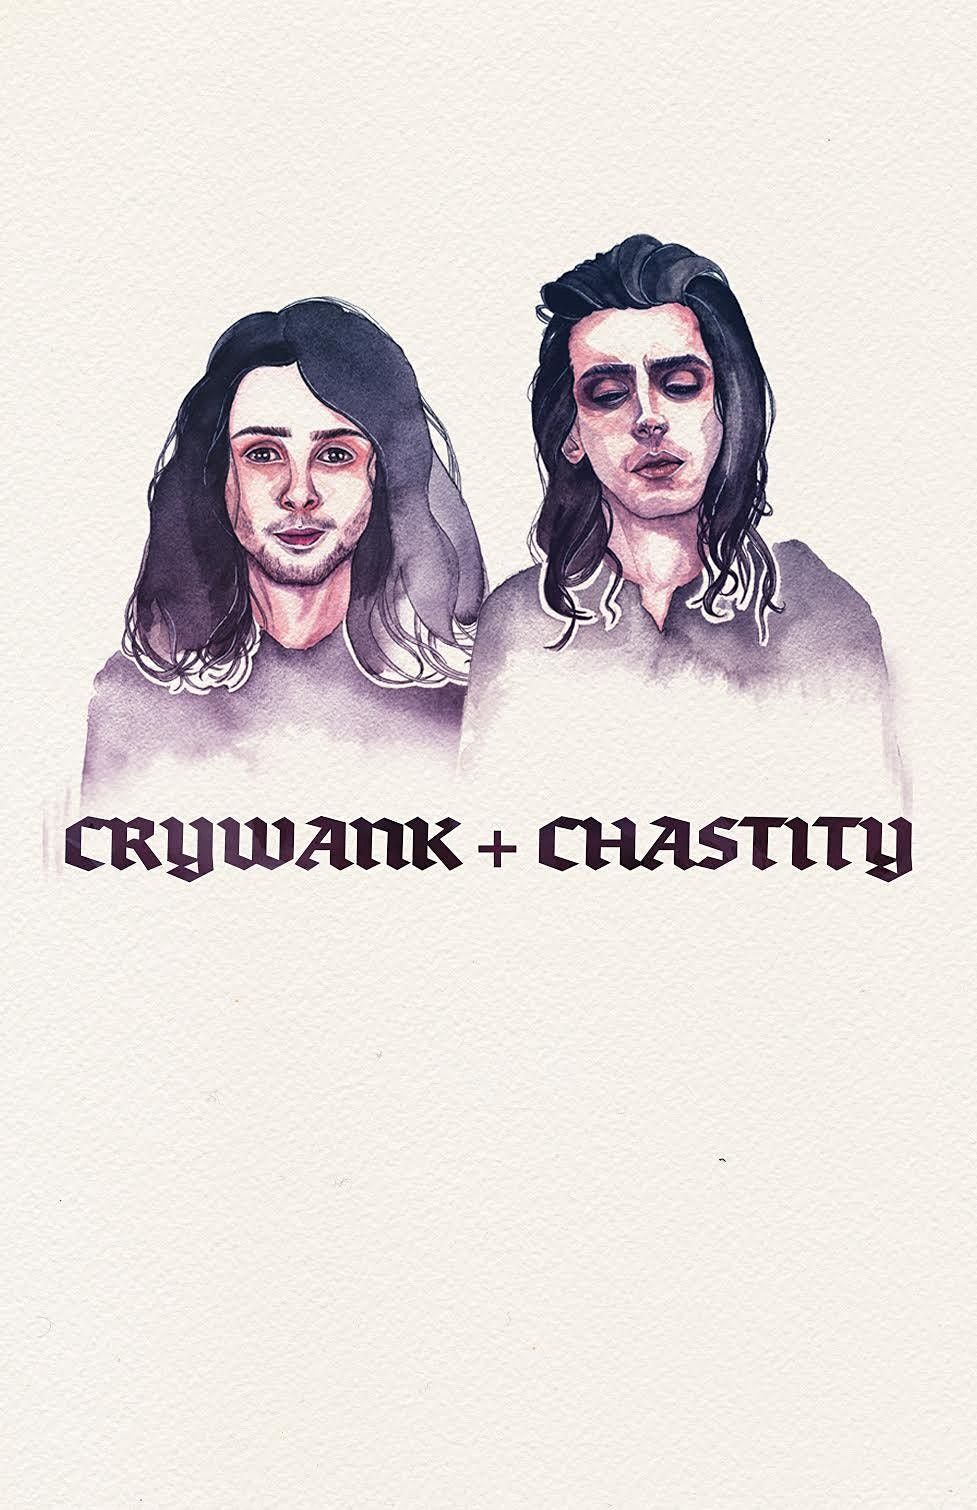 CRYWANK + CHASTITY